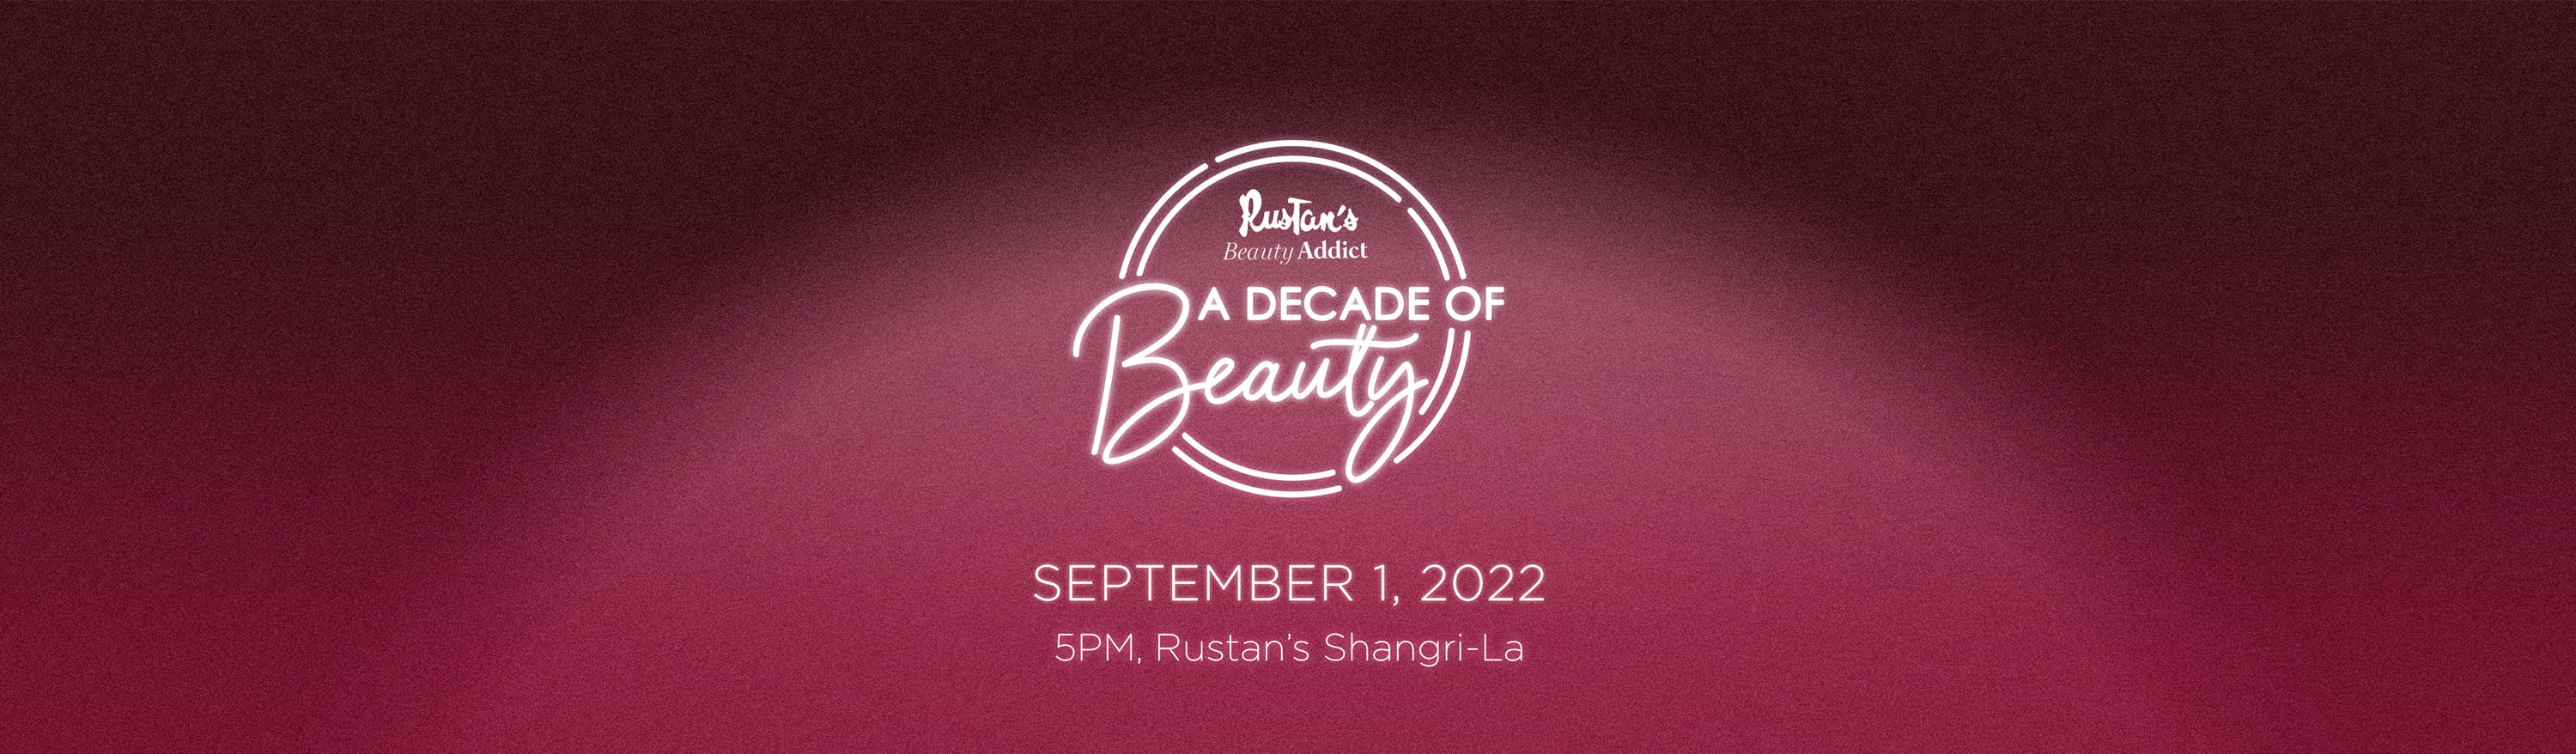 Rustan's Beauty Addict: A Decade of Beauty